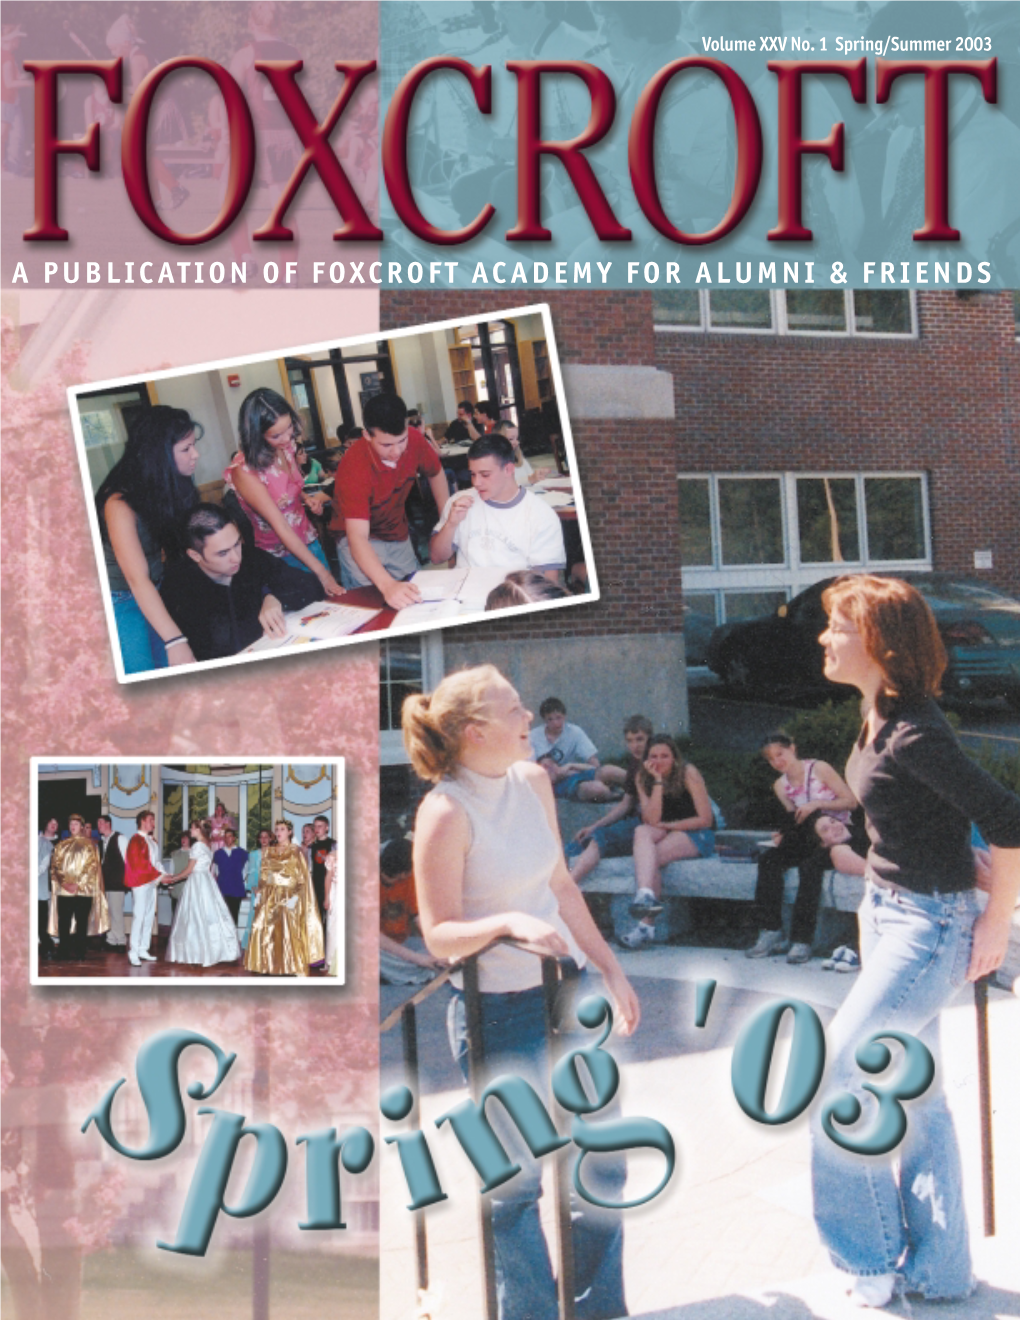 A Publication of Foxcroft Academy for Alumni & Friends